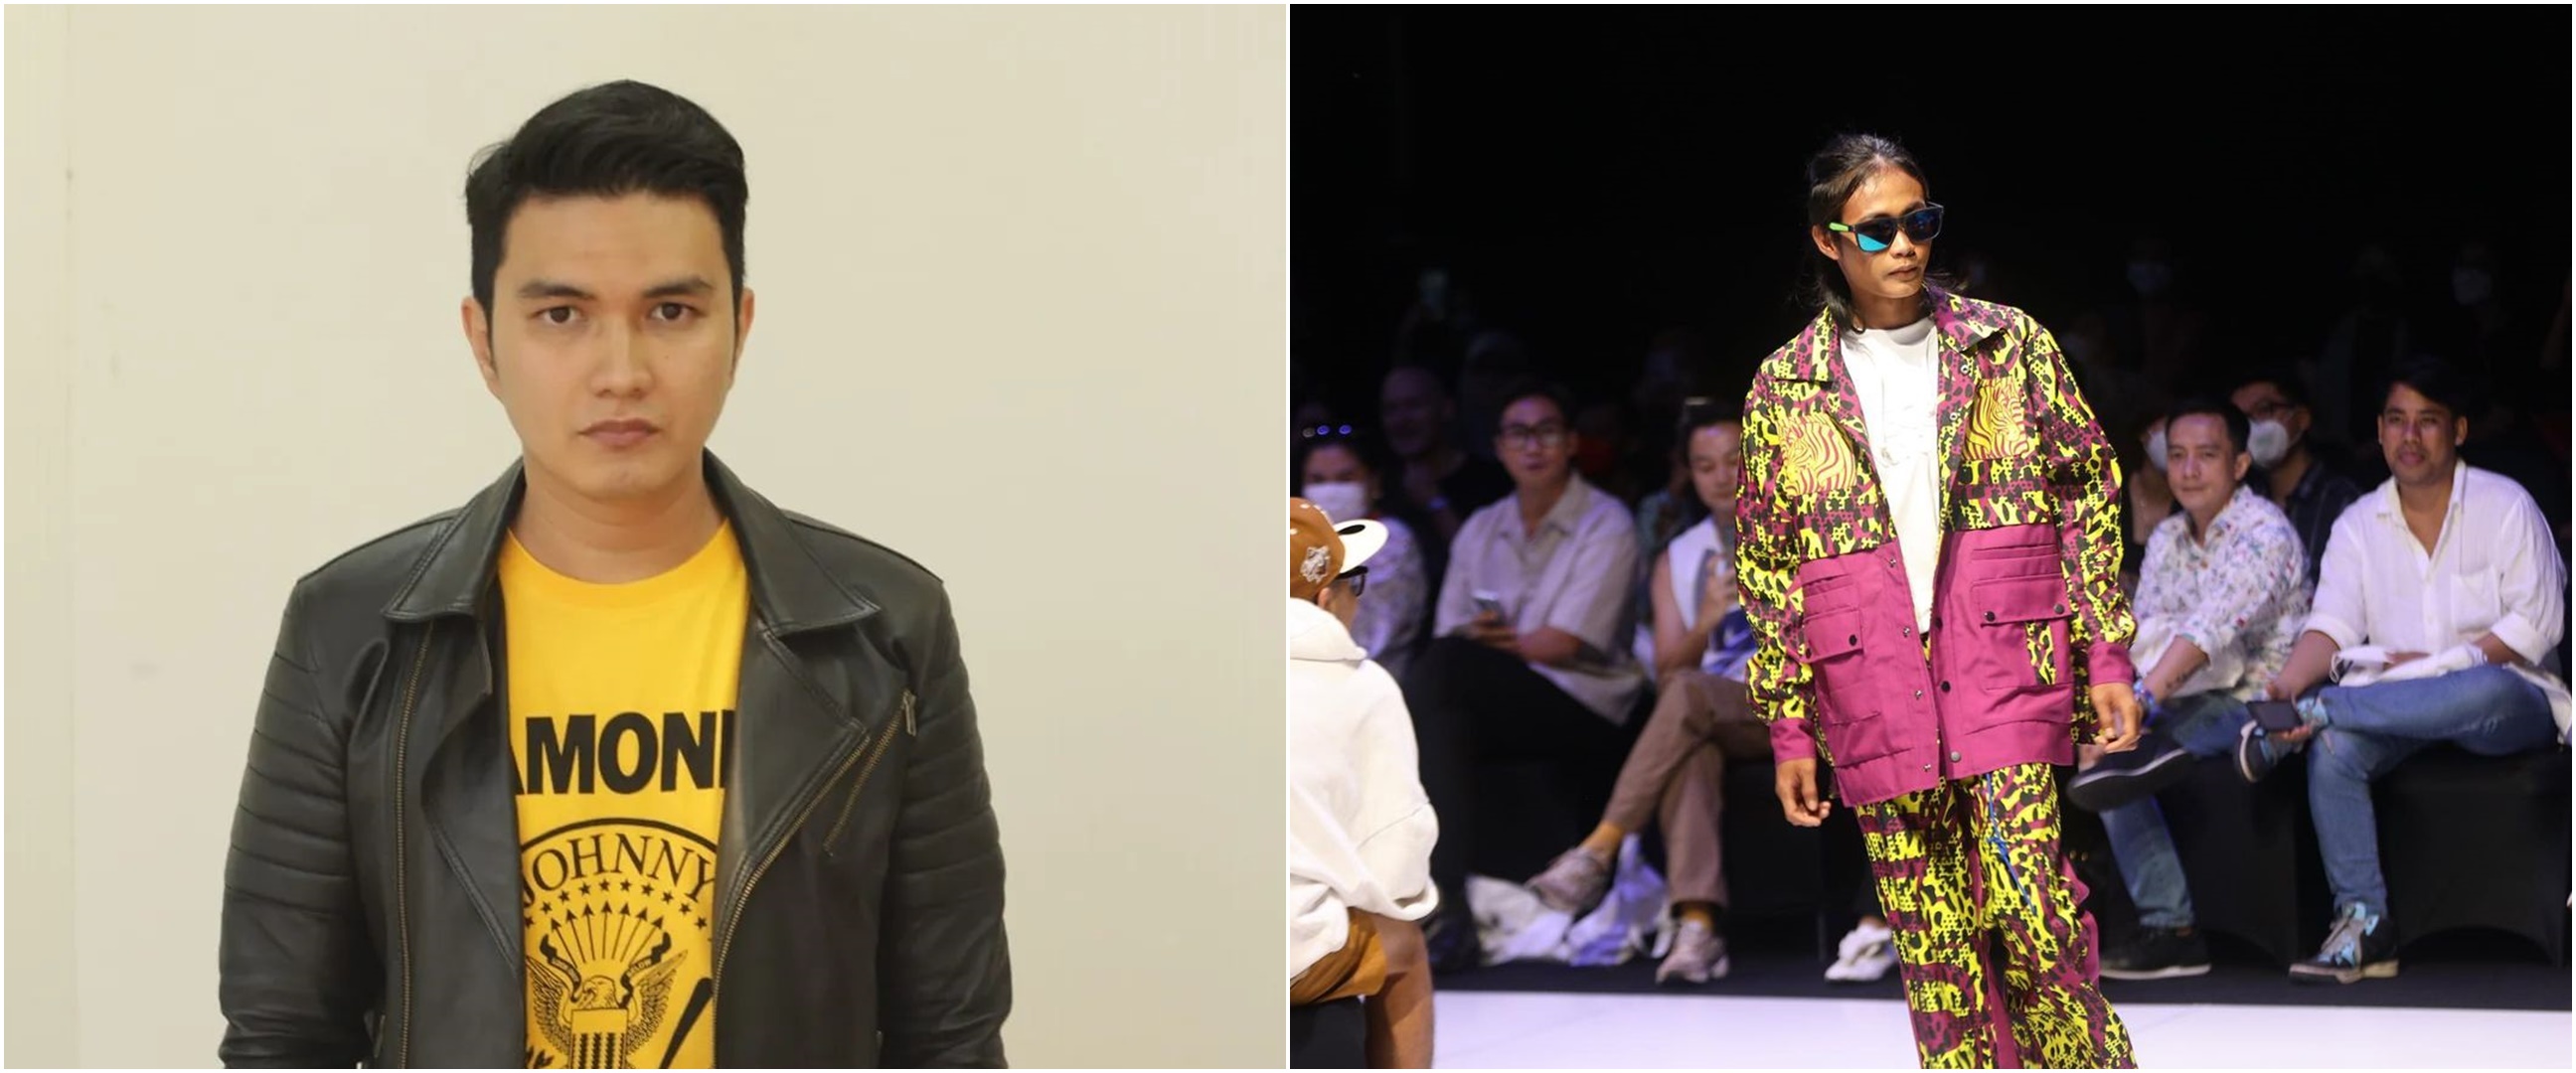 Ketenaran Bonge Citayam Fashion Week meredup, Aldi Taher beri semangat dan janji buatkan lagu